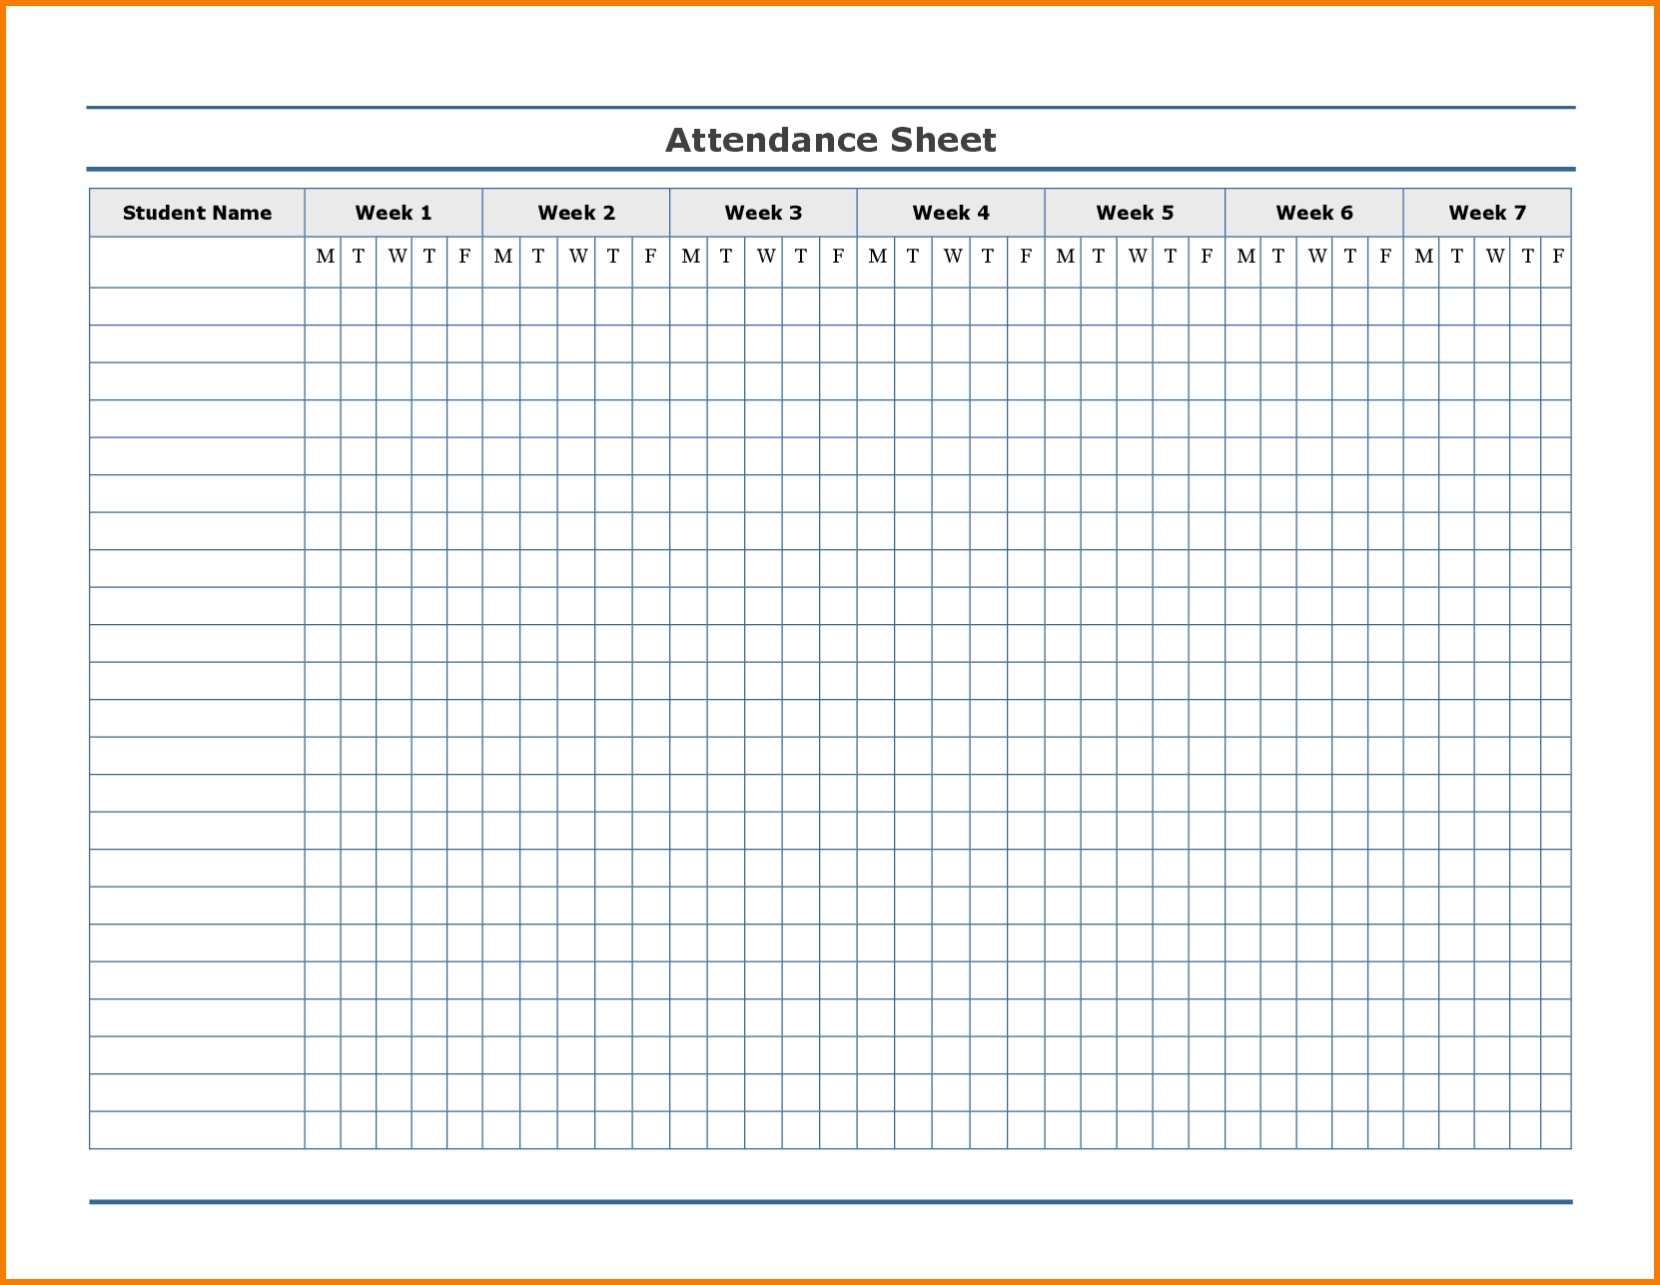 Employee Attendance Excel Sheet | Employee Attendance Sheet-2020 Attendance Tracker Template